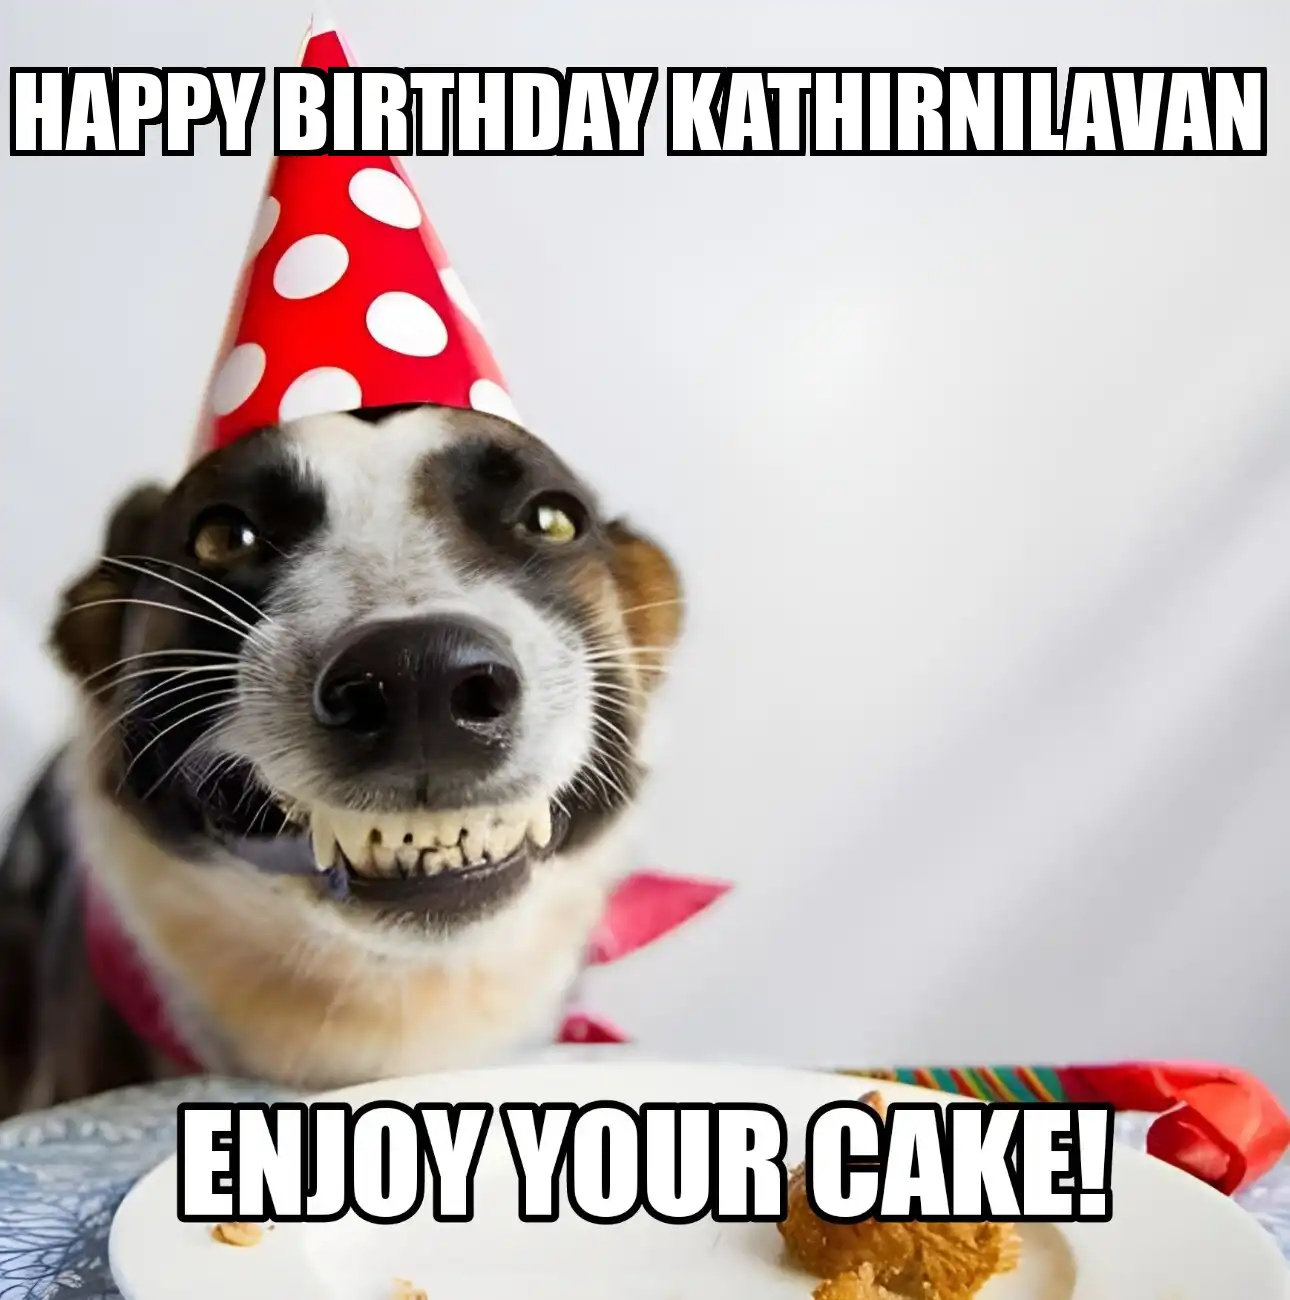 Happy Birthday Kathirnilavan Enjoy Your Cake Dog Meme